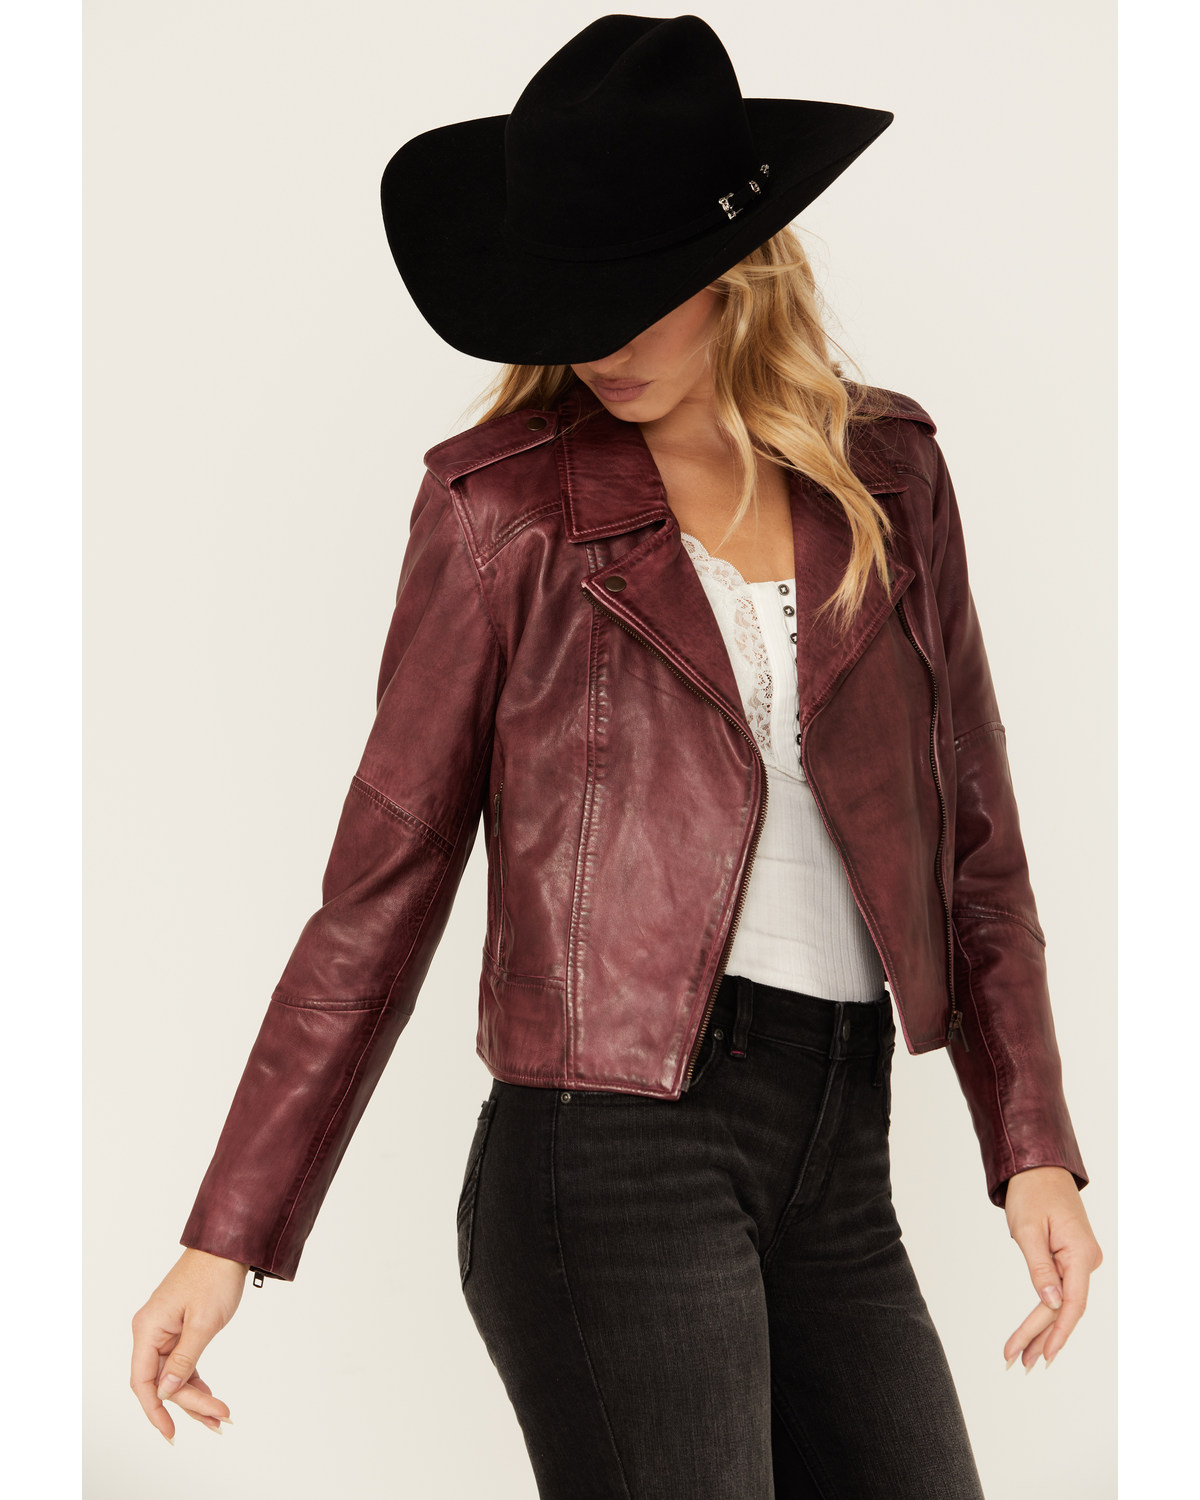 Idyllwind Women's Sparrow Leather Jacket